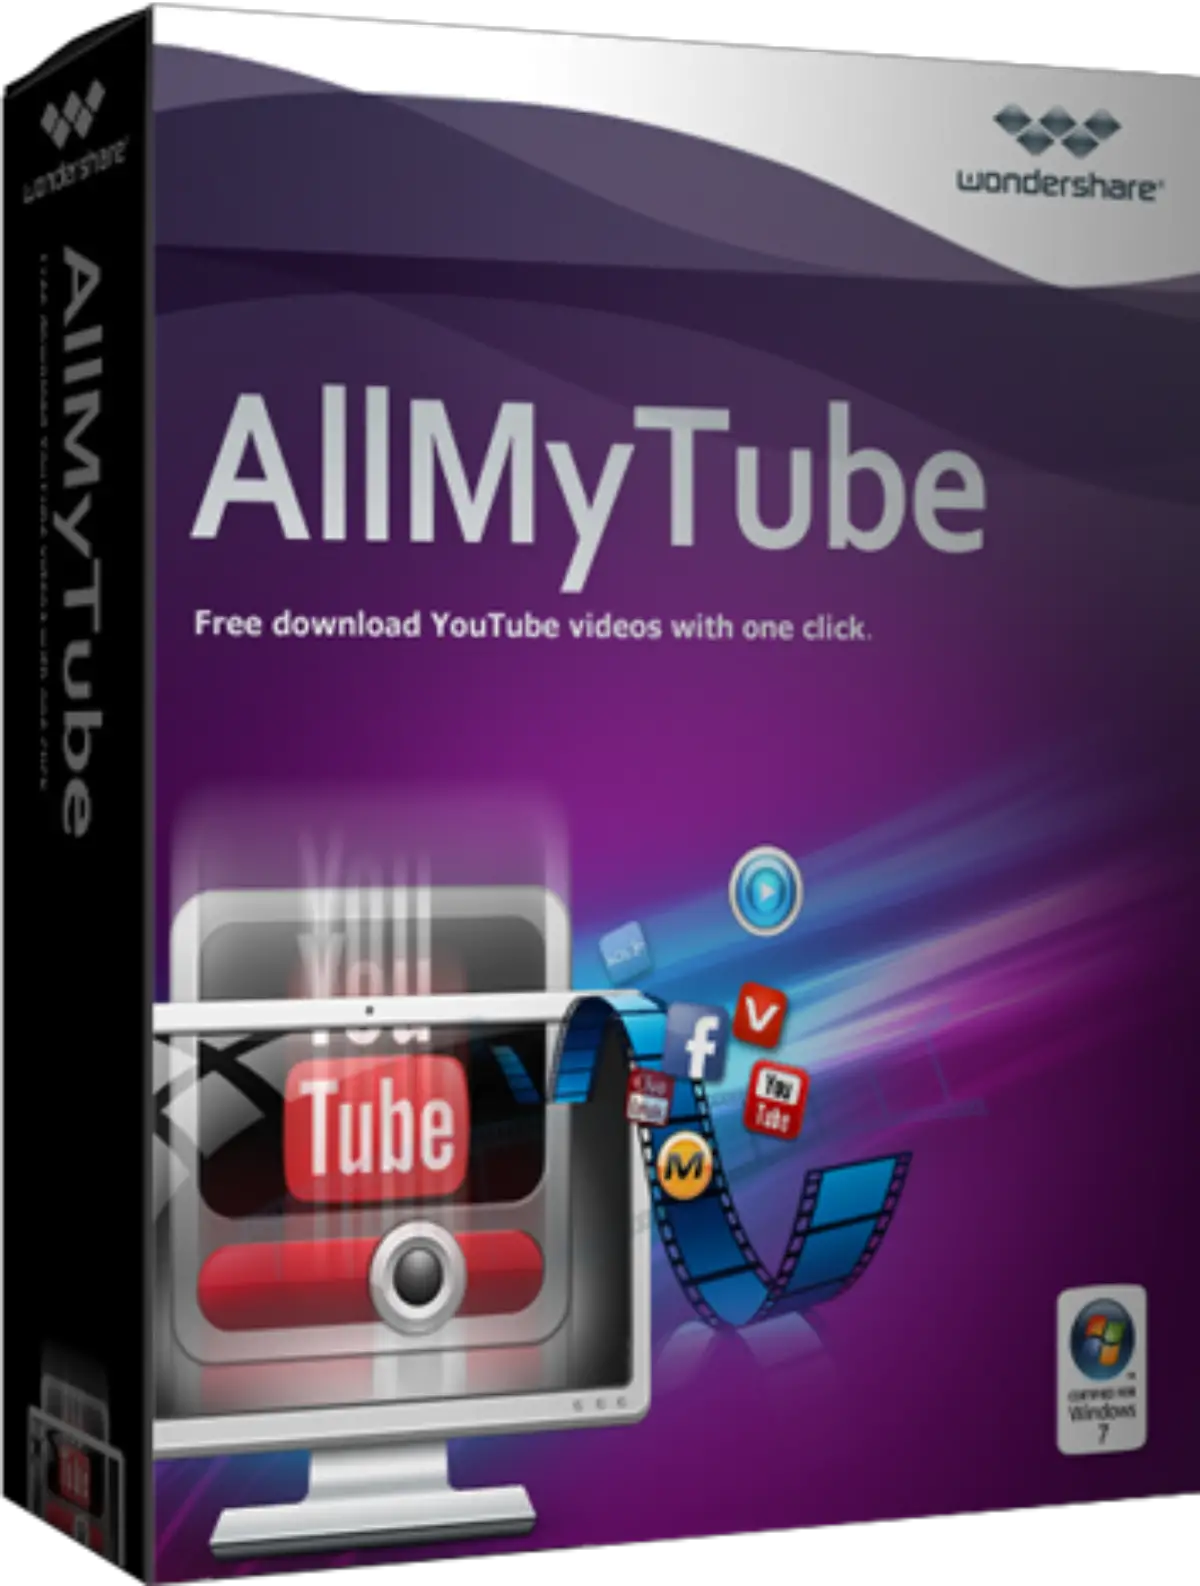 Wondershare AllMyTube Full Version Free Download